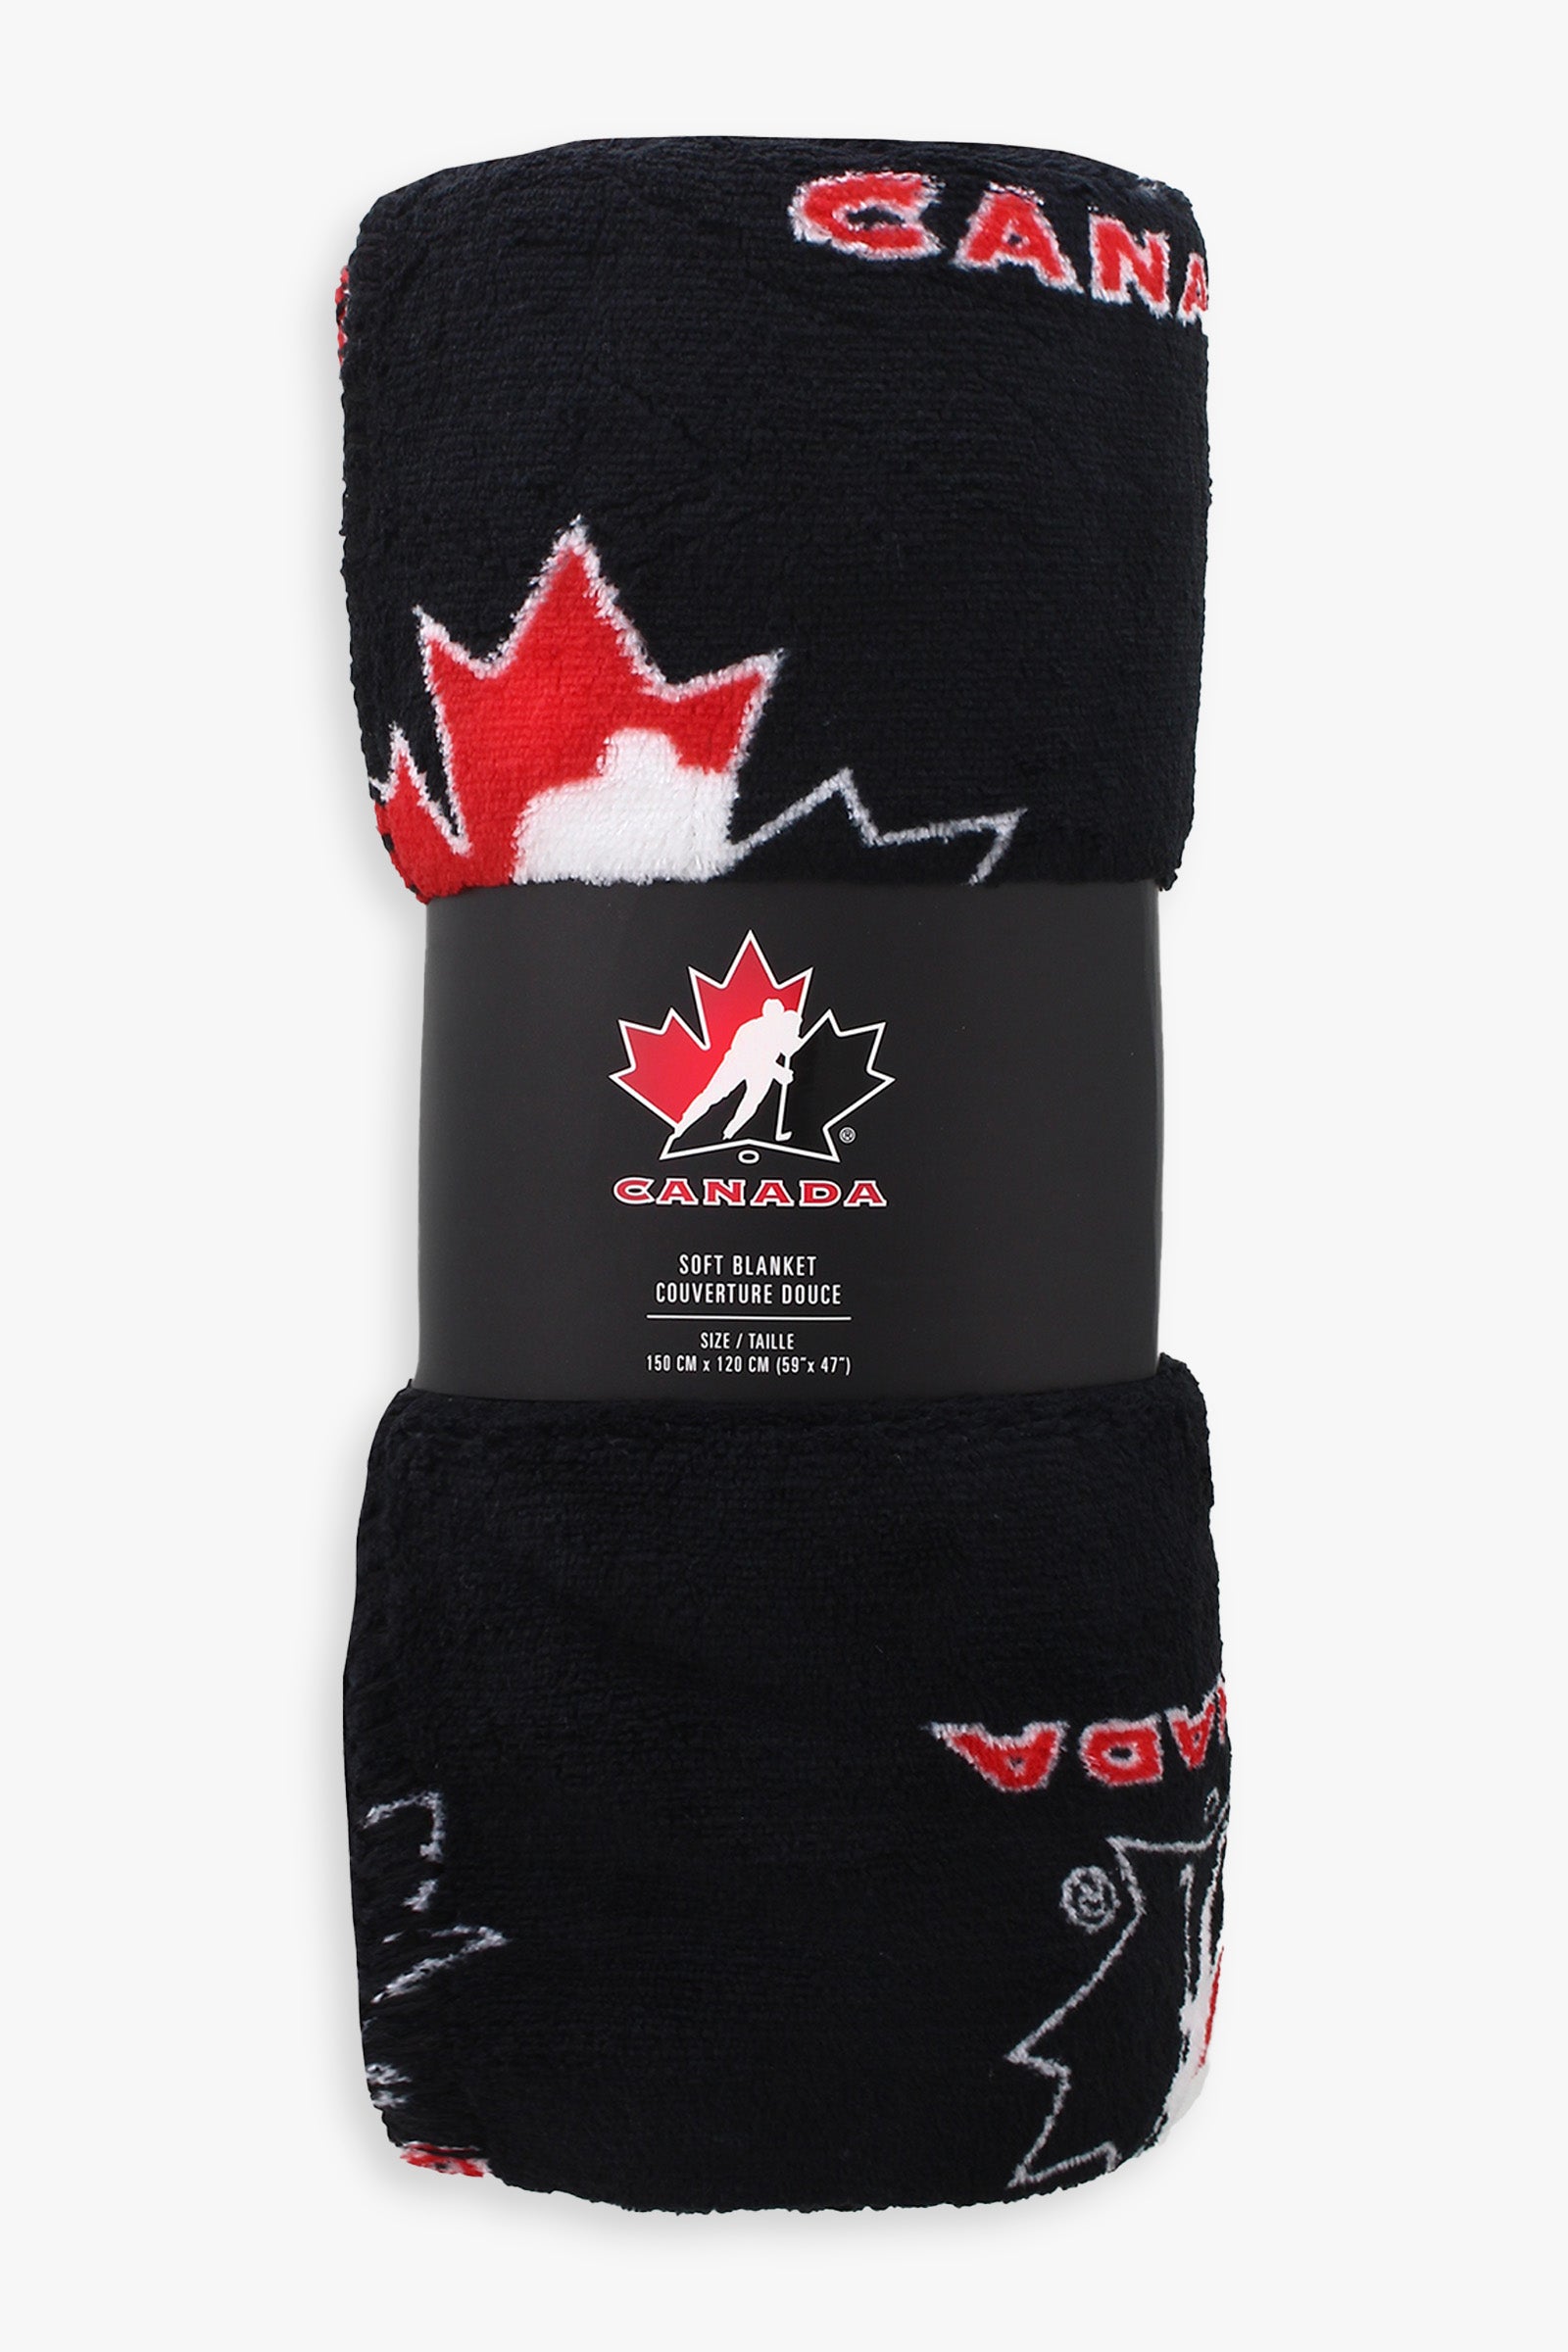 Gertex Hockey Canada Black Fleece Throw (120cm X 150cm)